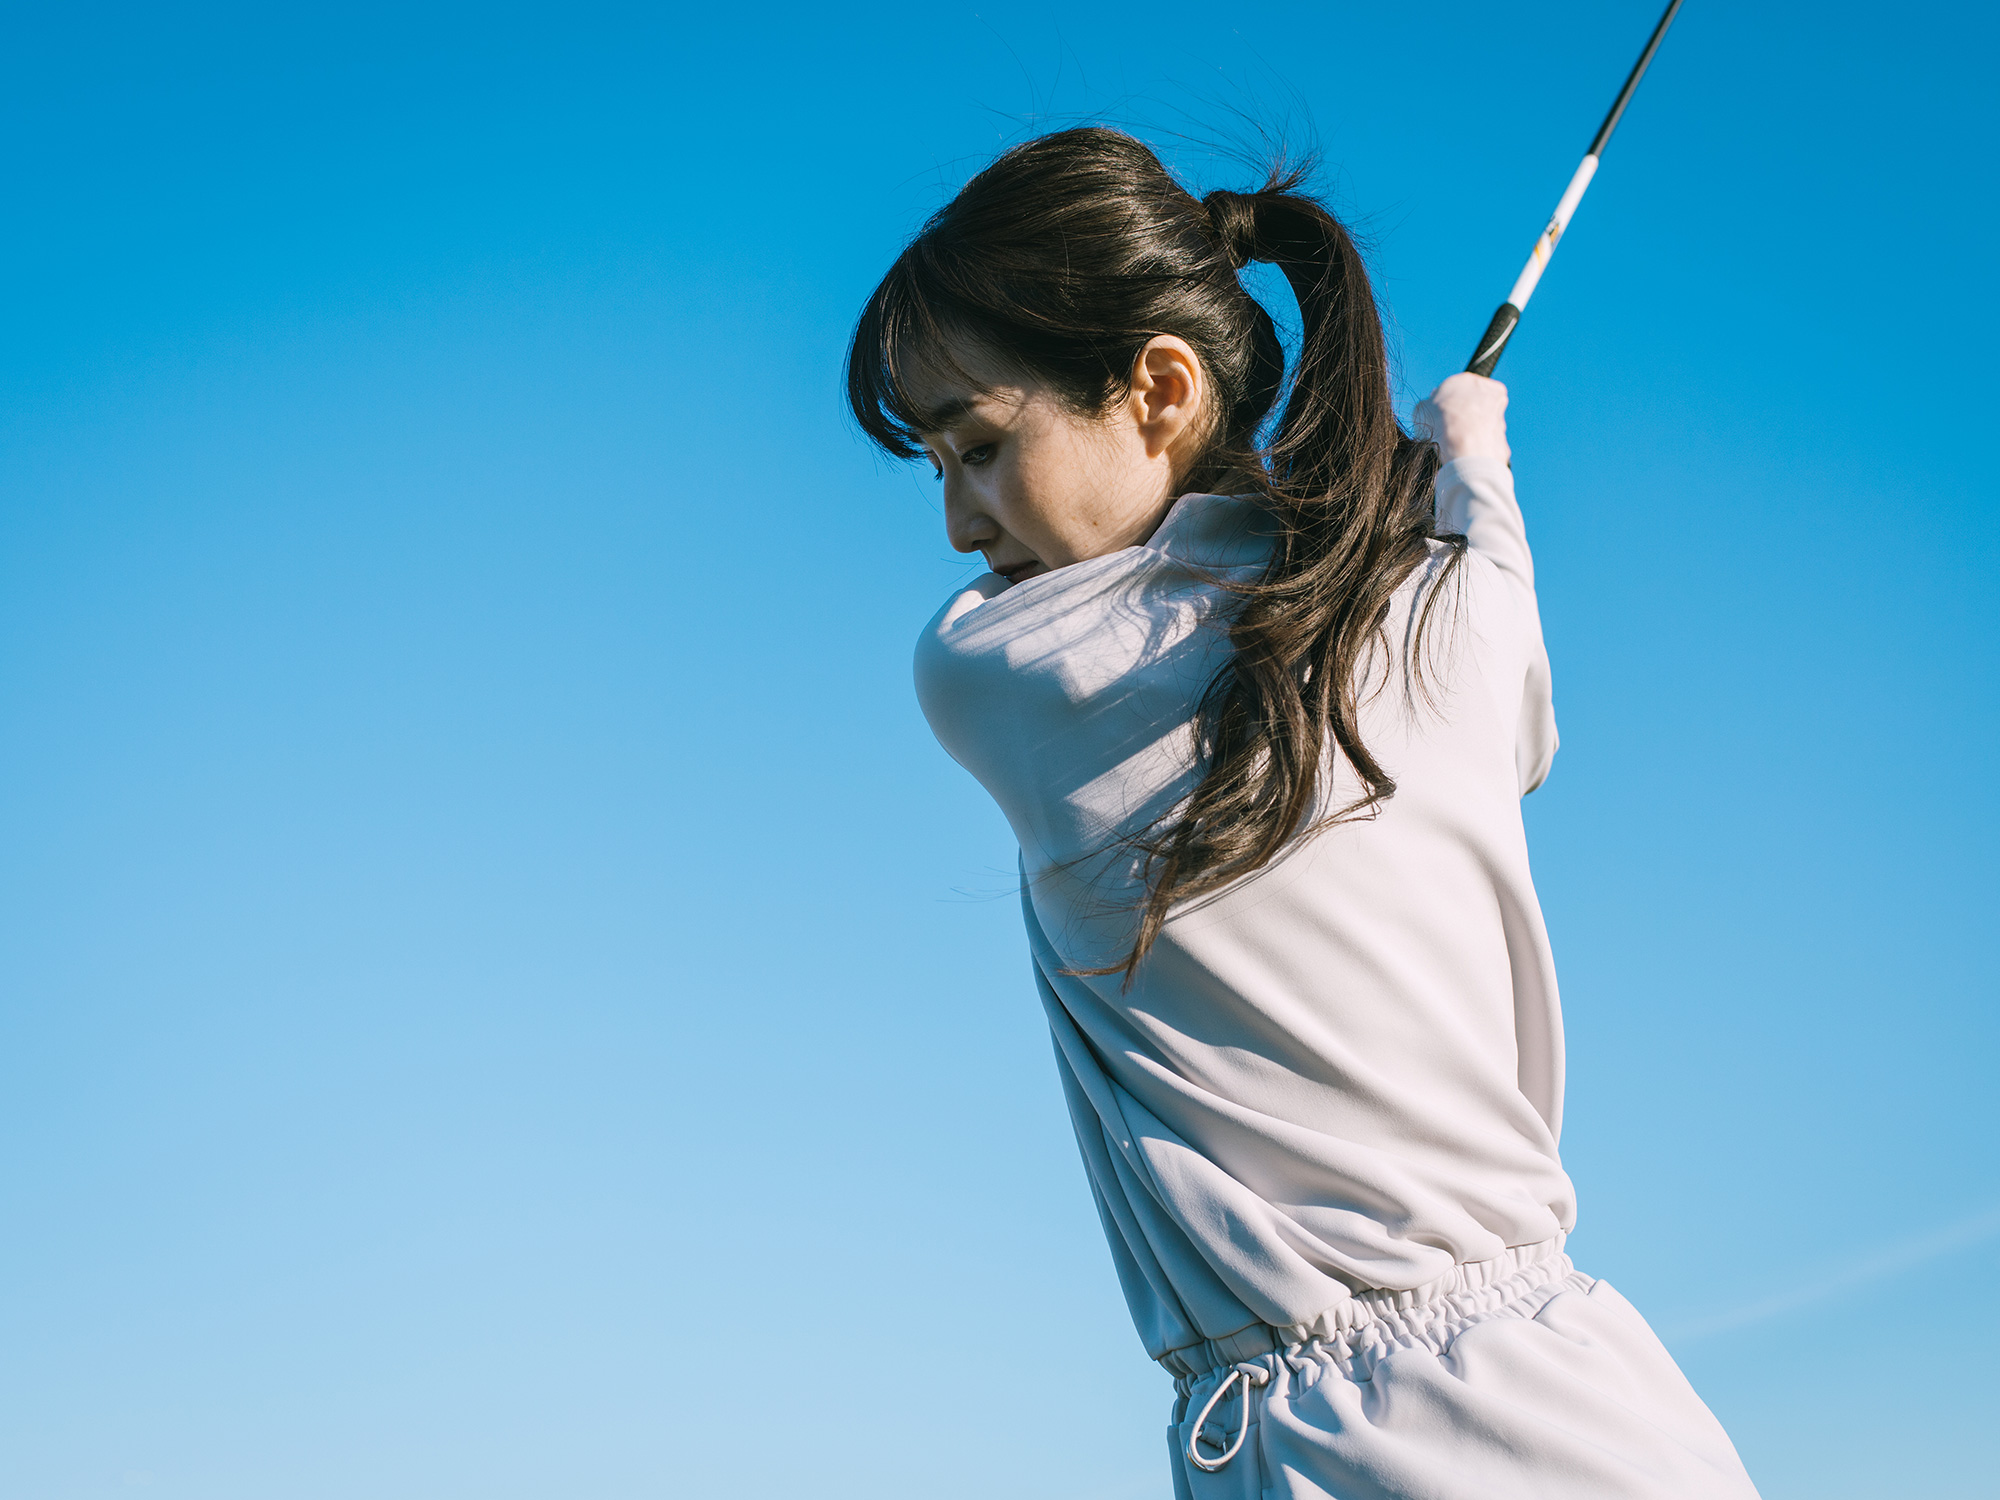 yosoro&.のウェアを着てゴルフをする女性